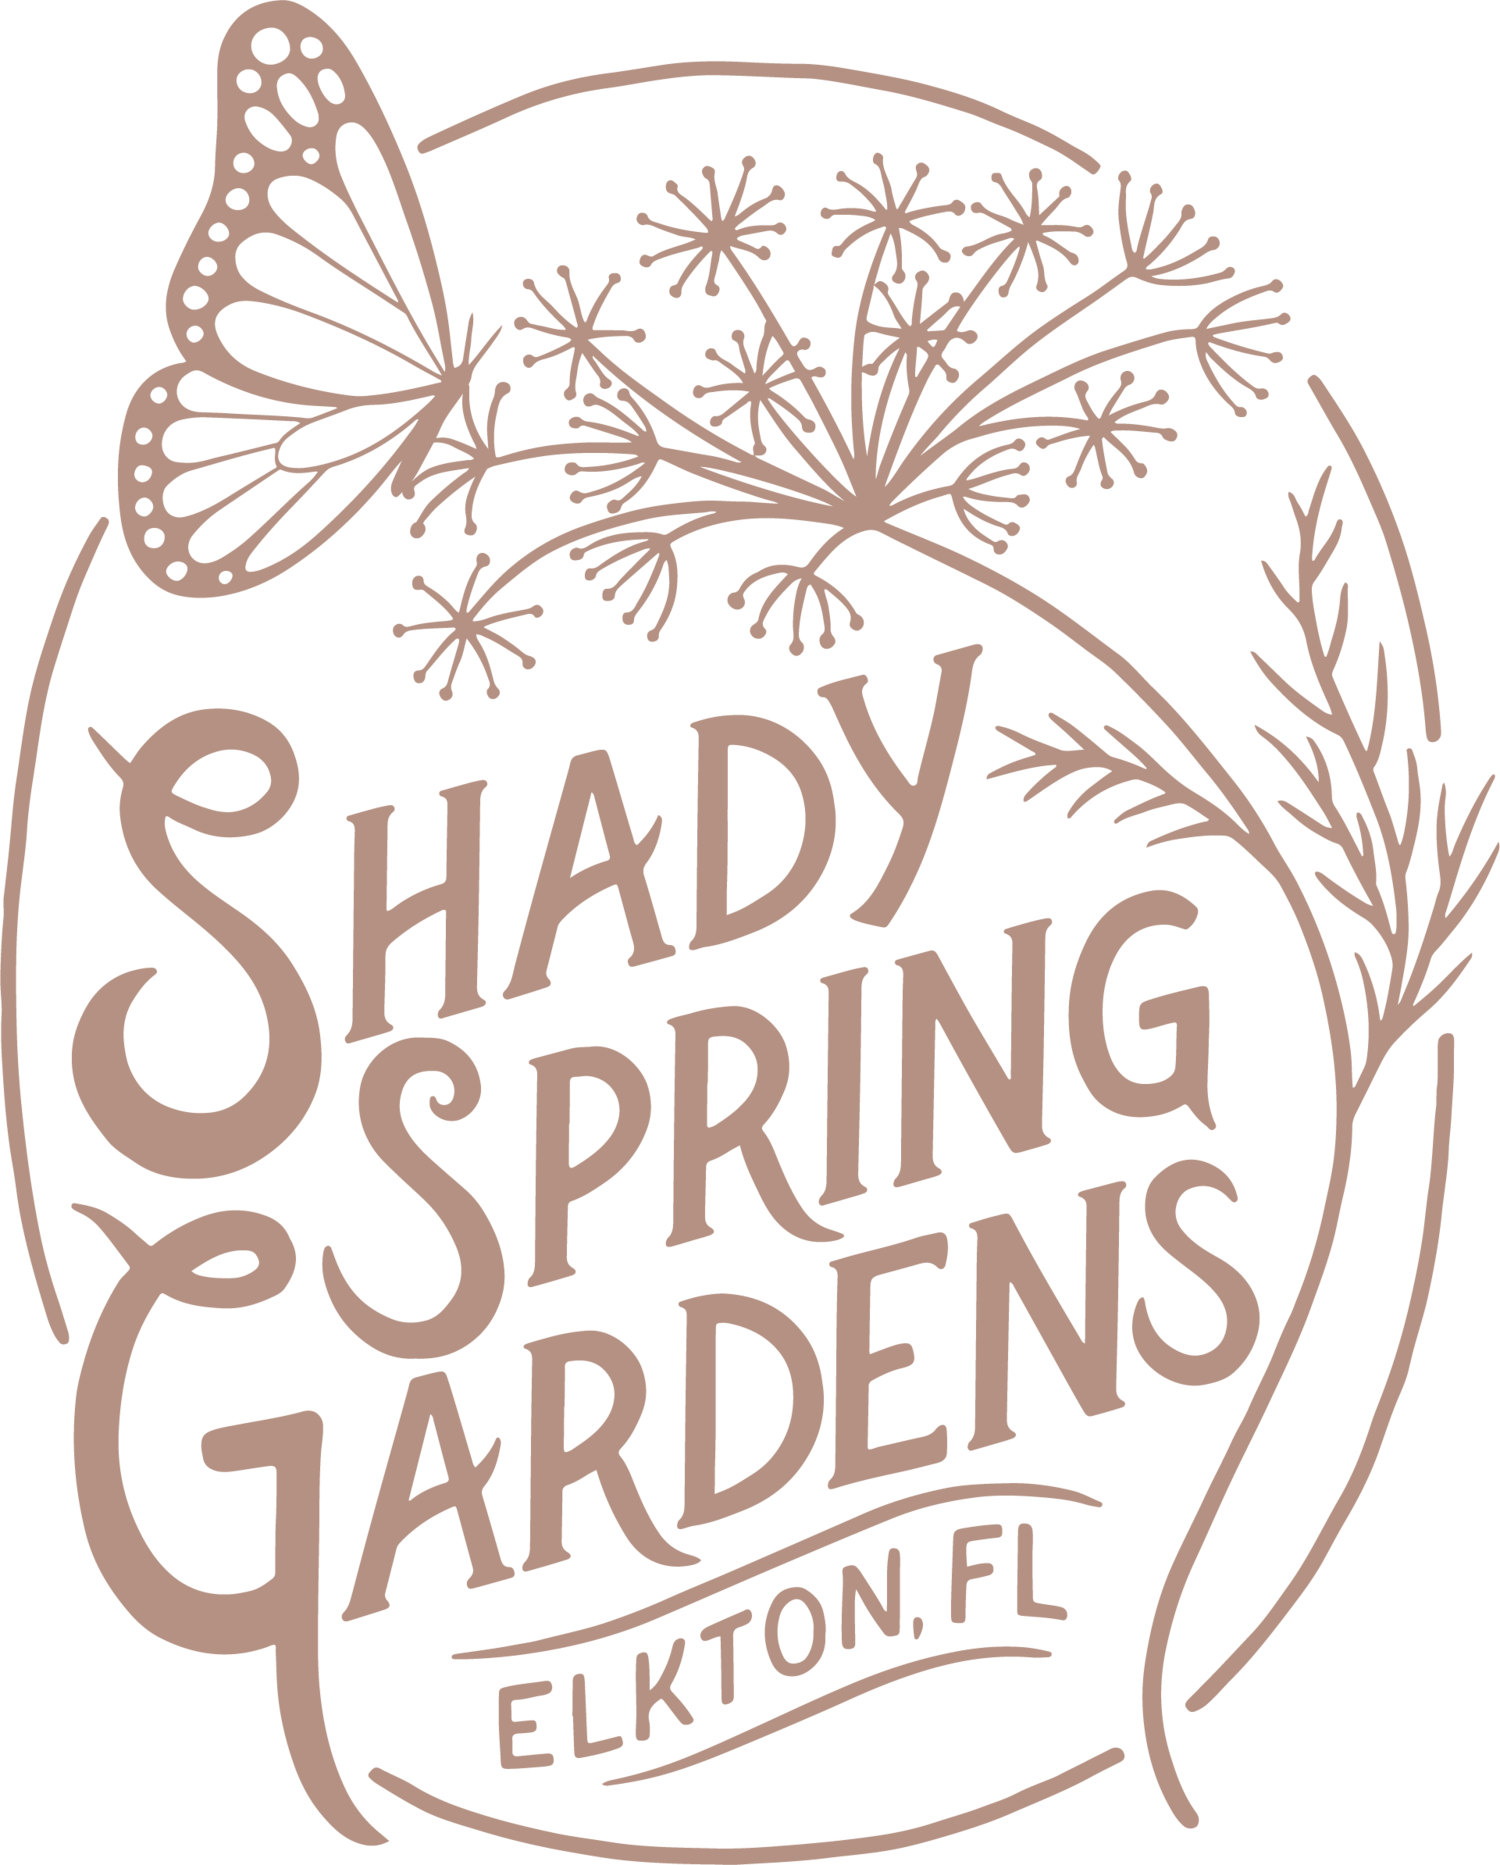 Shady Spring Gardens